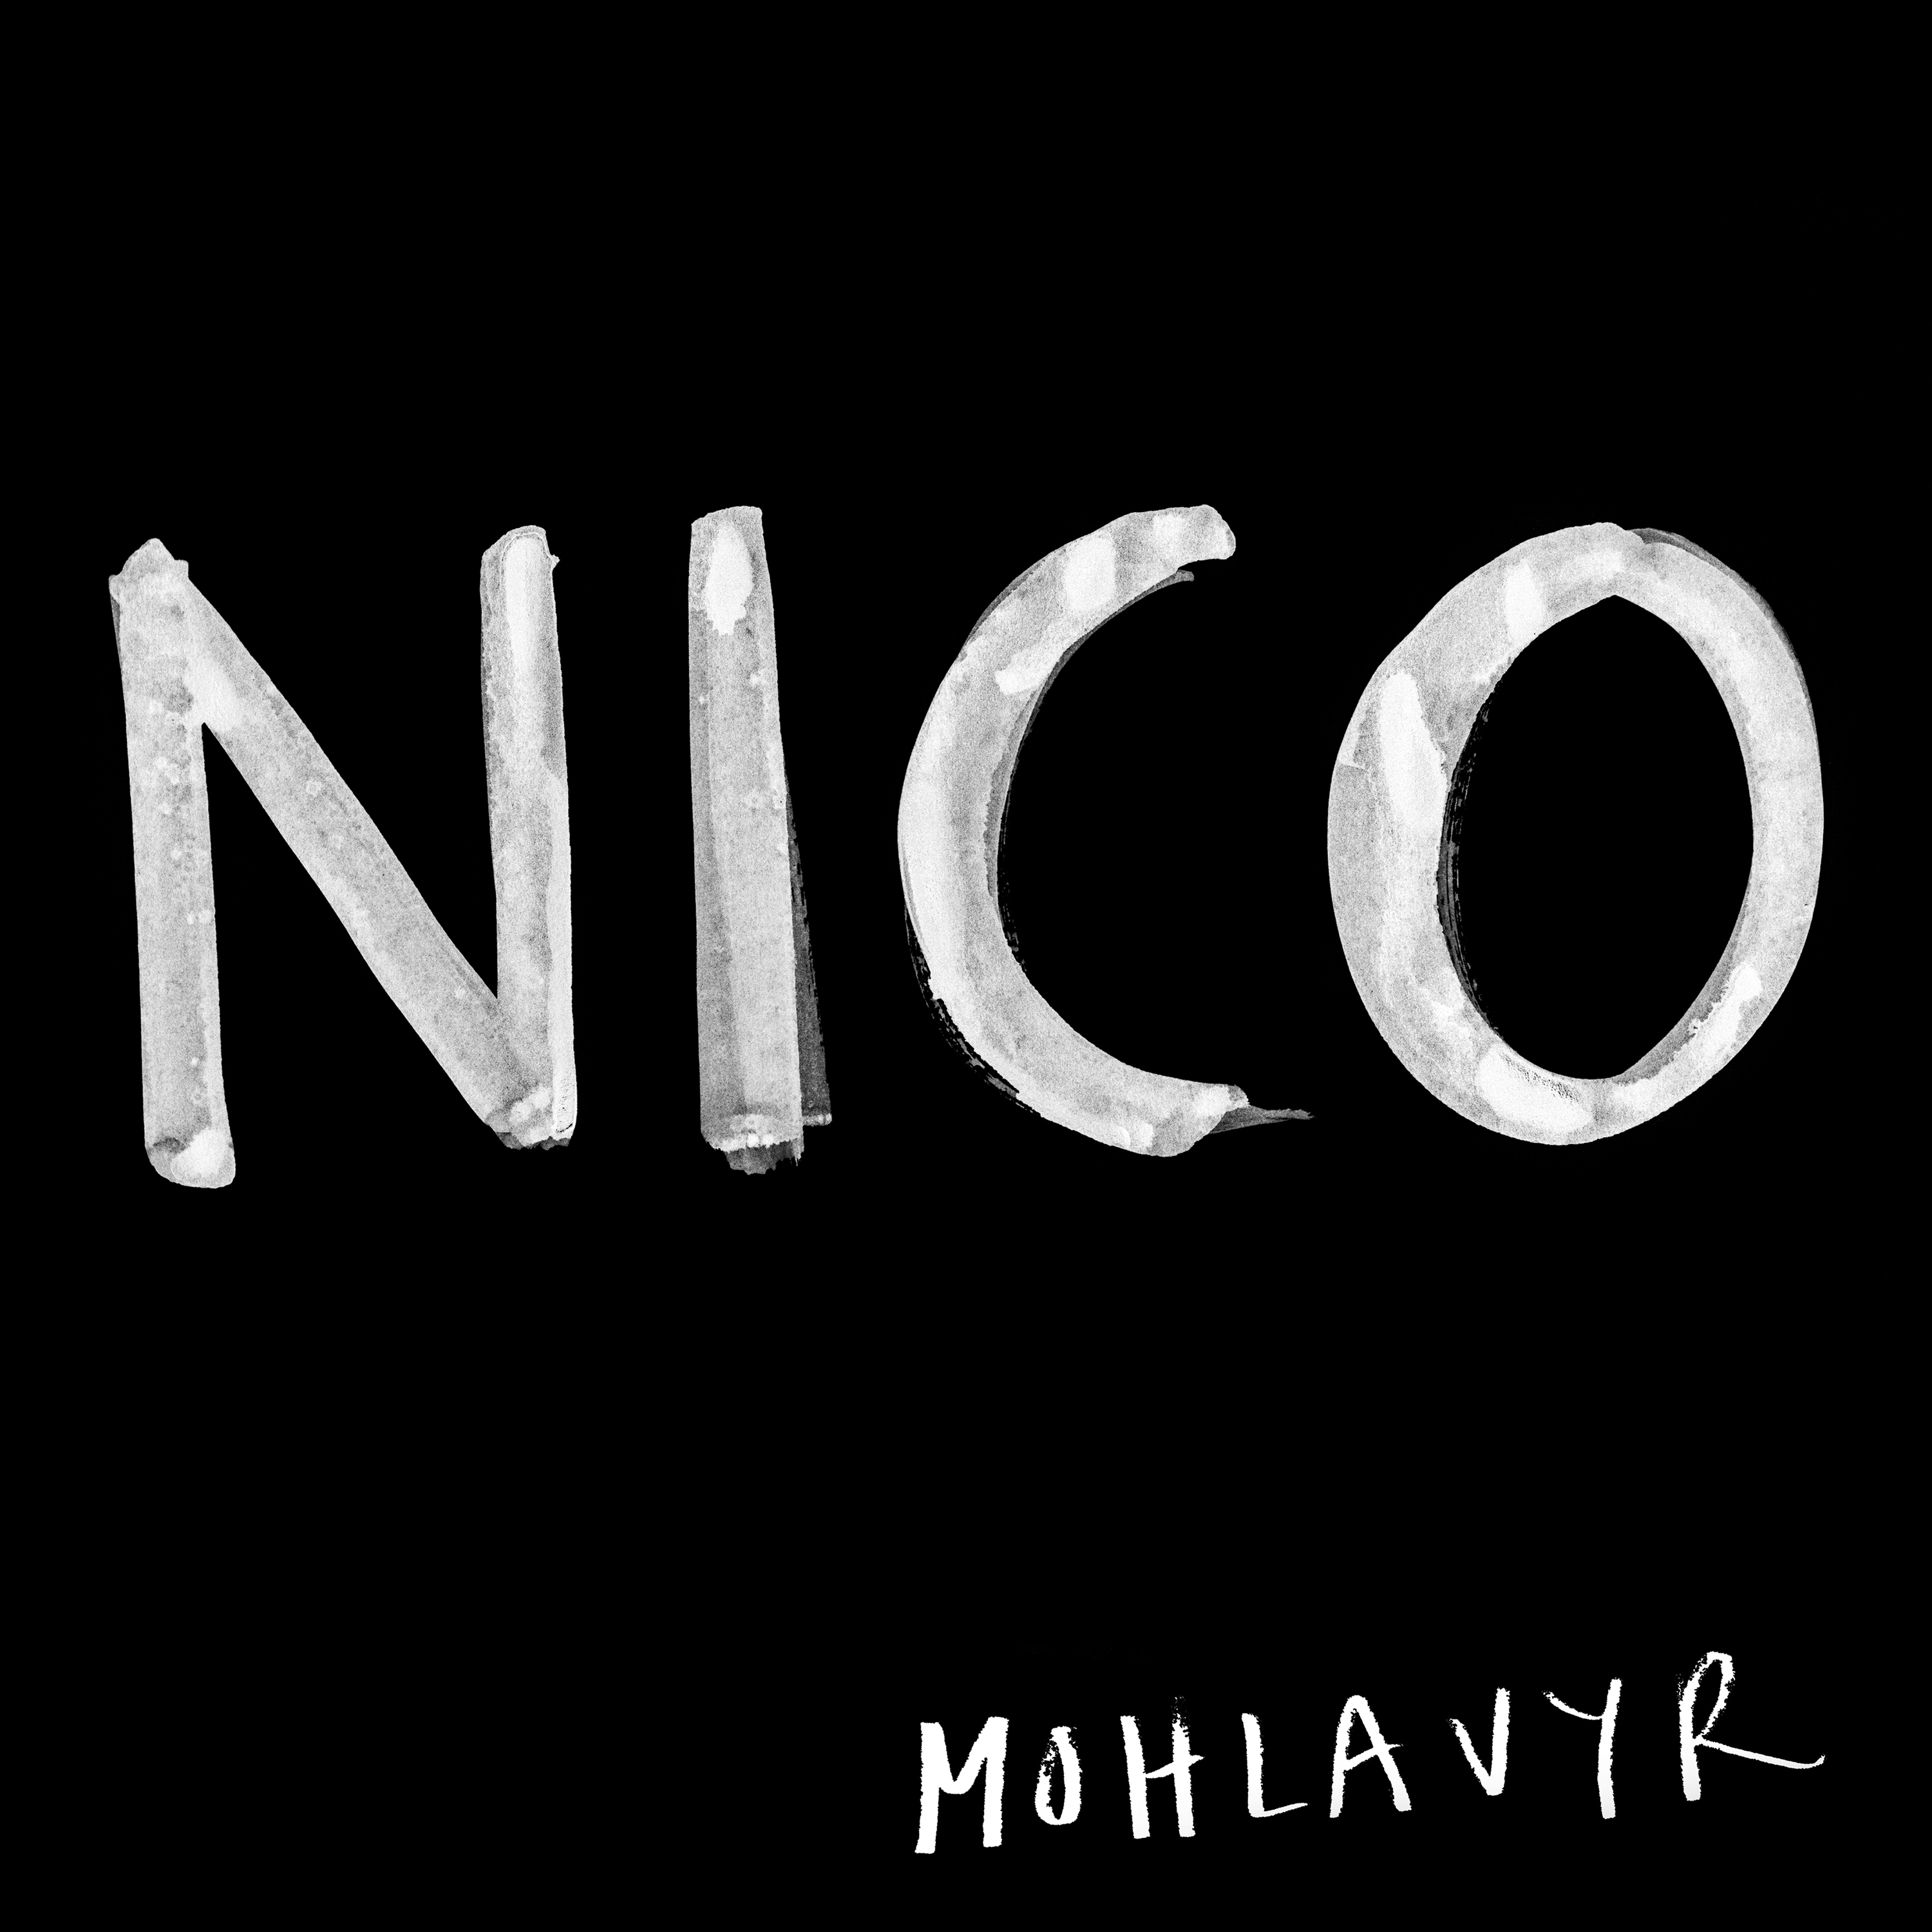 Mohlavyr - NICO singelomslag 3000pxl 300dpi